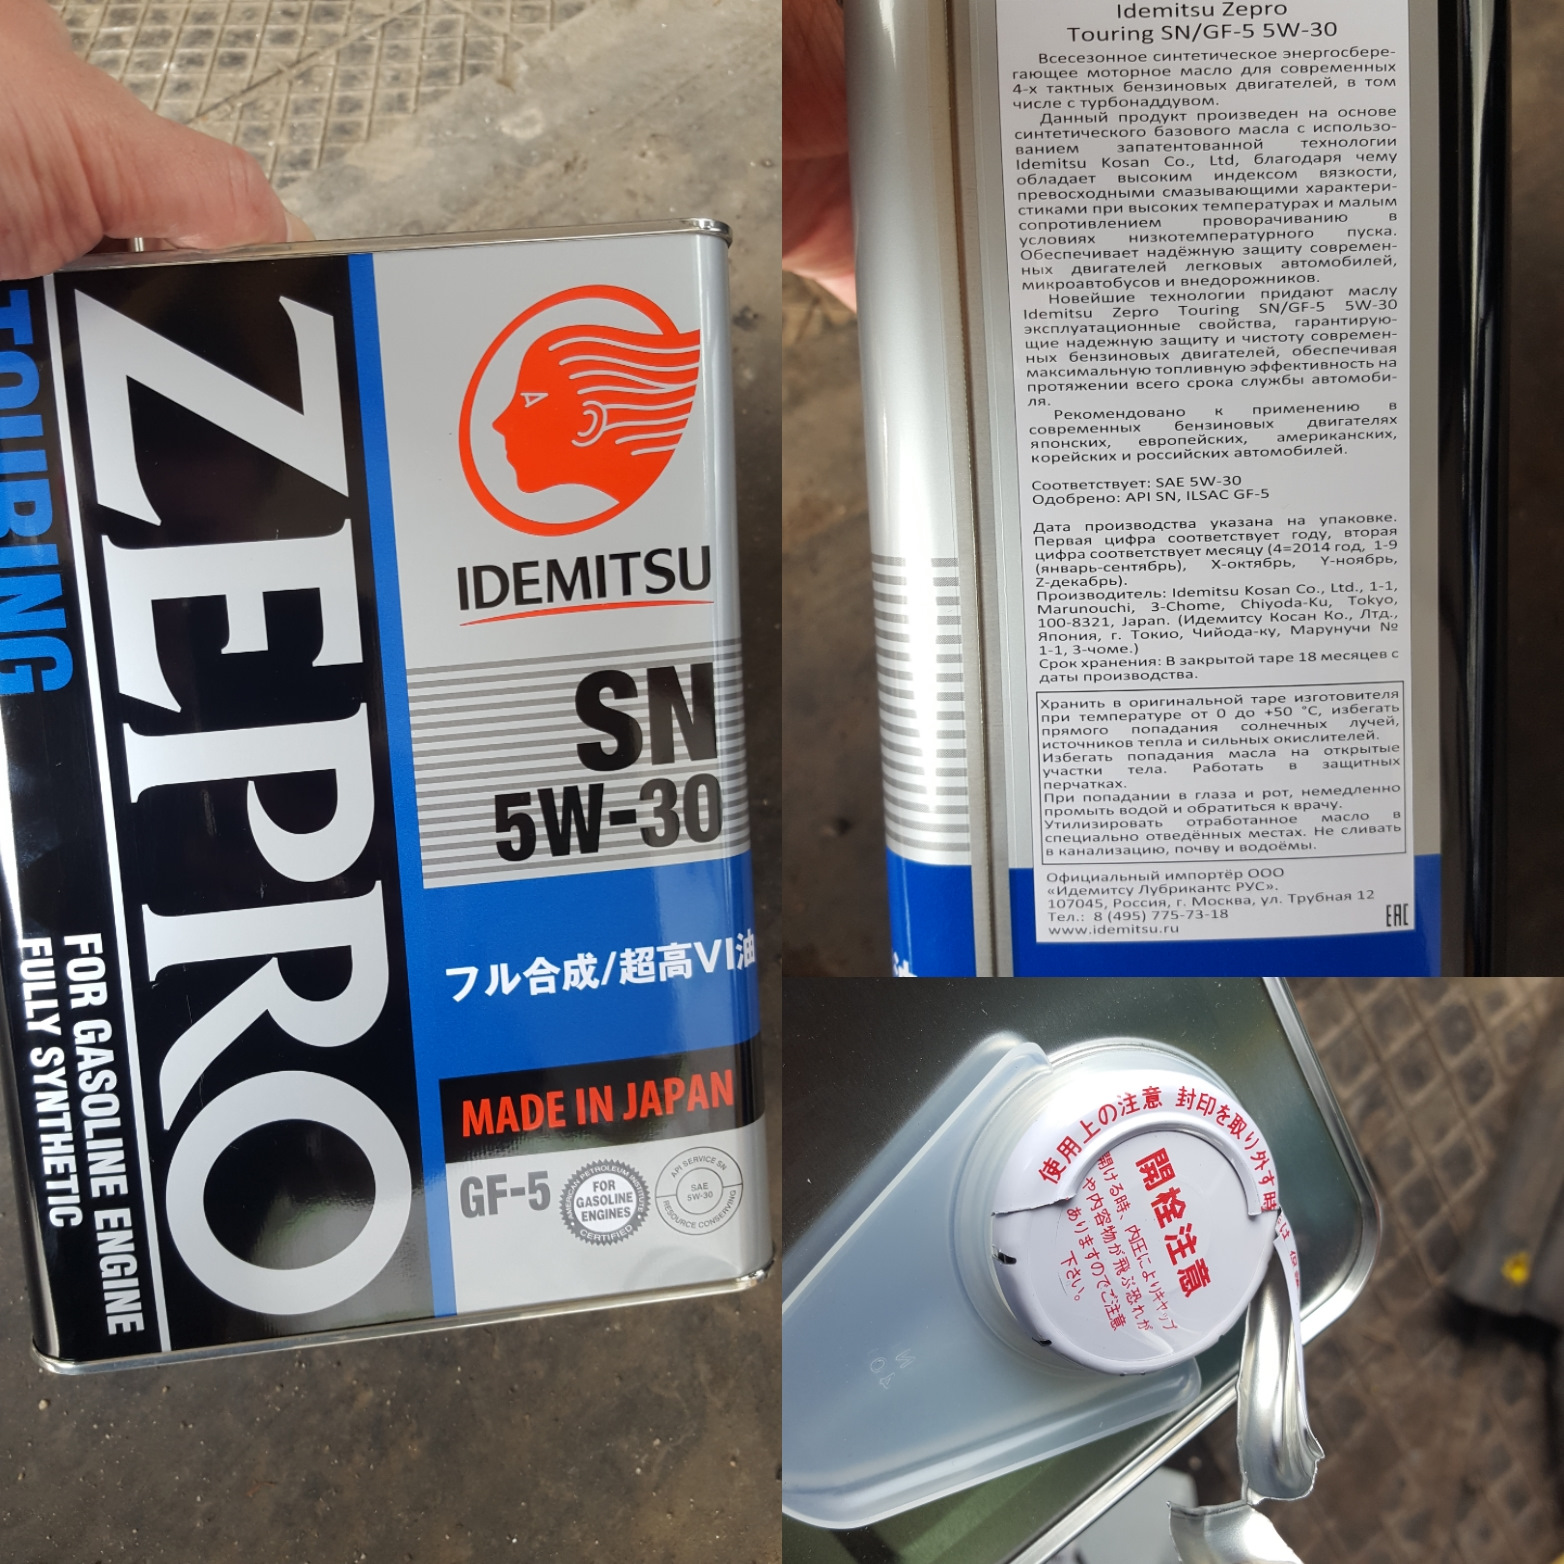 Zepro масло 5w 30. Идемитсу 5w30 красный. Idemitsu Zepro 5w30. Idemitsu 5w30 полусинтетическое. Idemitsu 5w30 Zepro Touring spec.